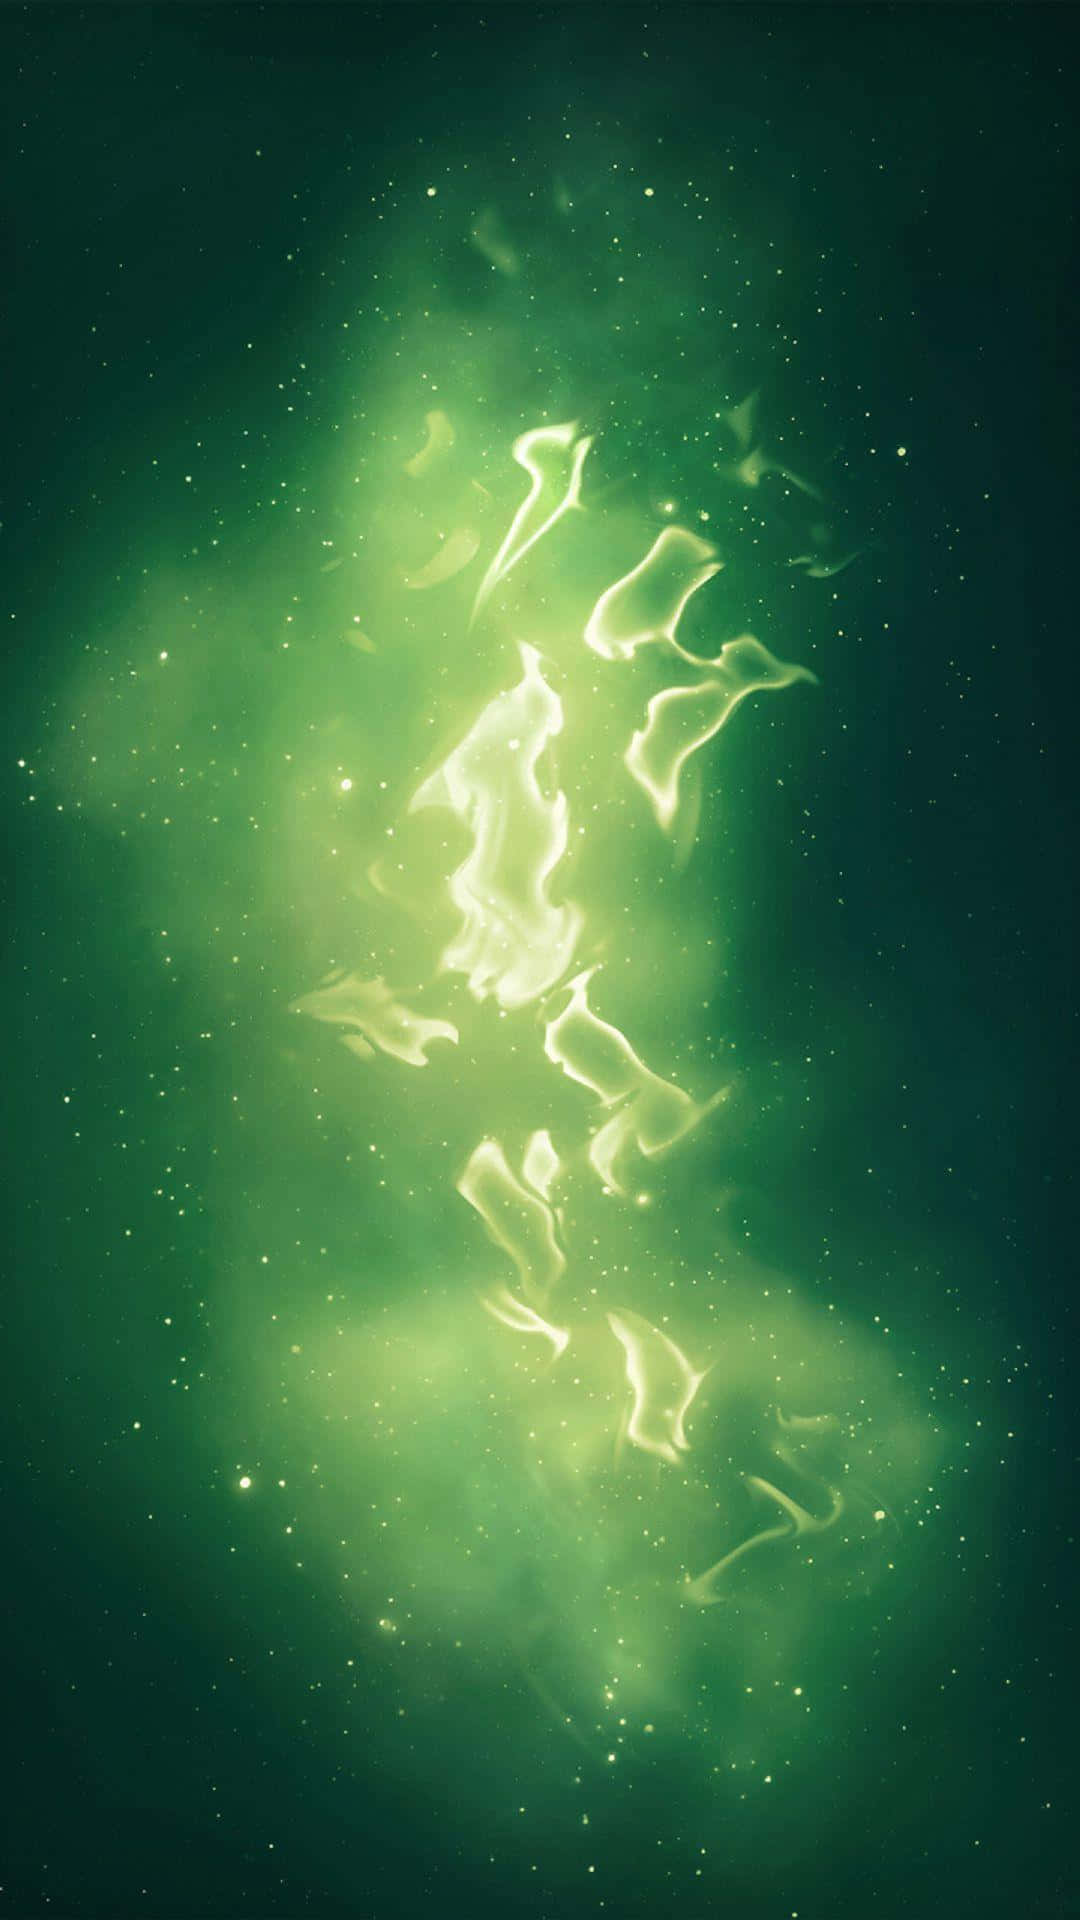 ac02-wallpaper-space-star-night-dark-green-wallpaper